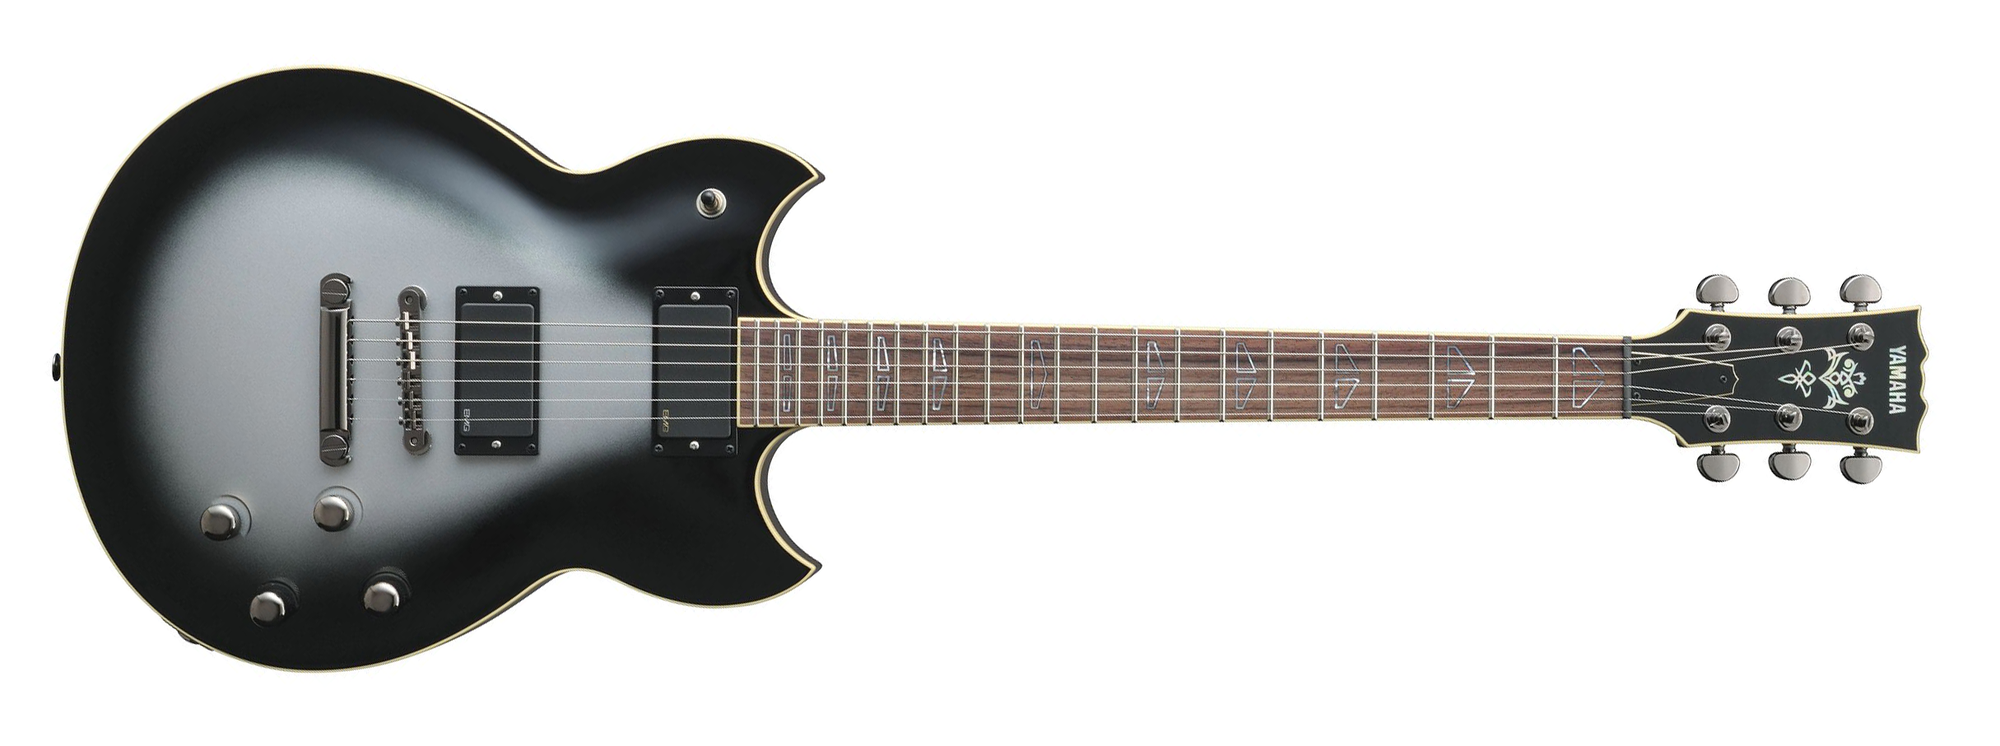 Yamaha SG1820A SLB SG Series 6-String RH Electric Guitar with Case Silver Burst